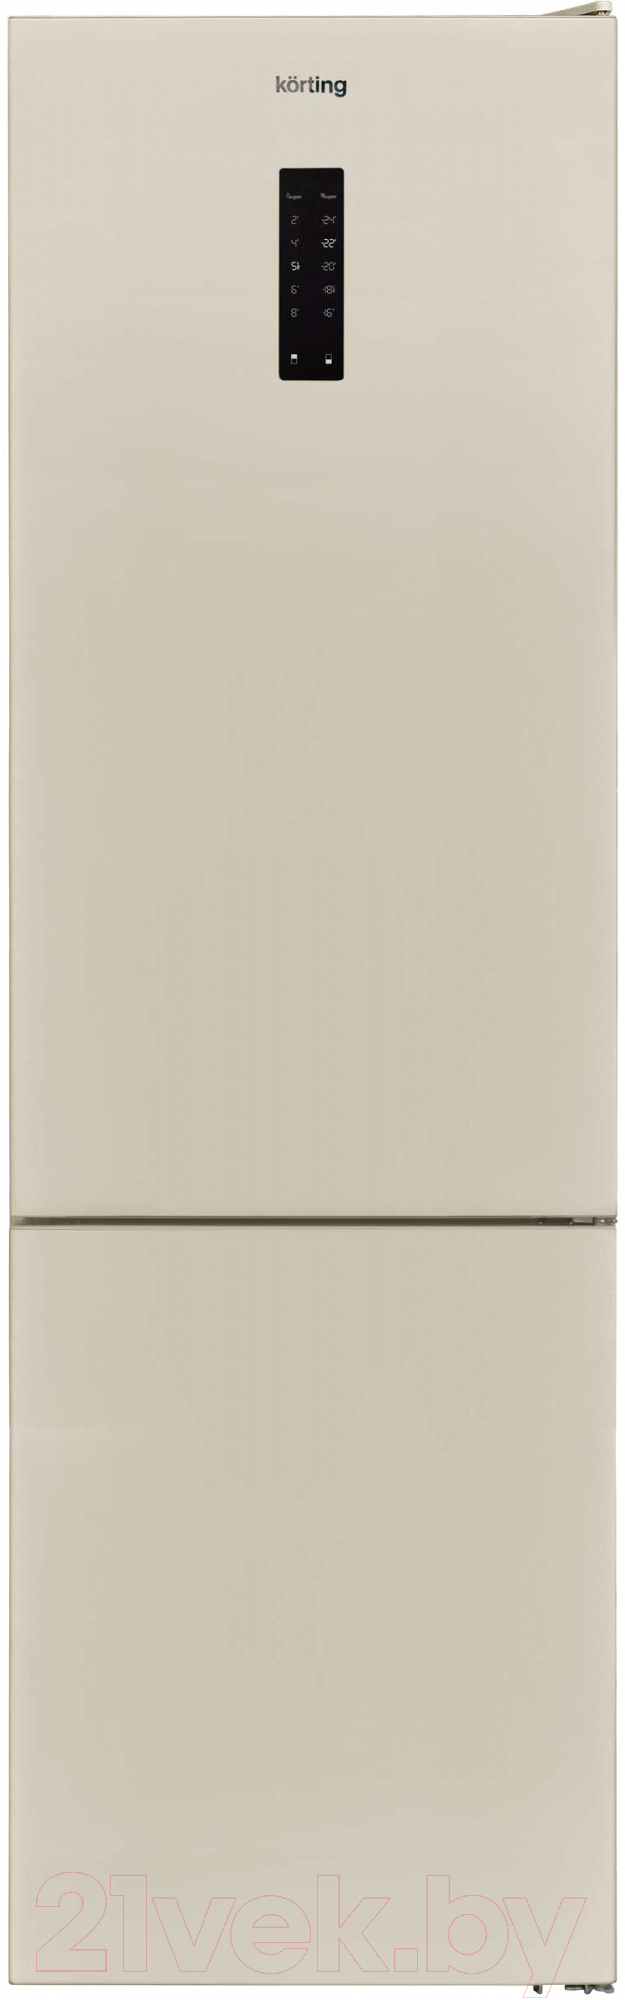 Холодильник с морозильником Korting KNFC 62010 B